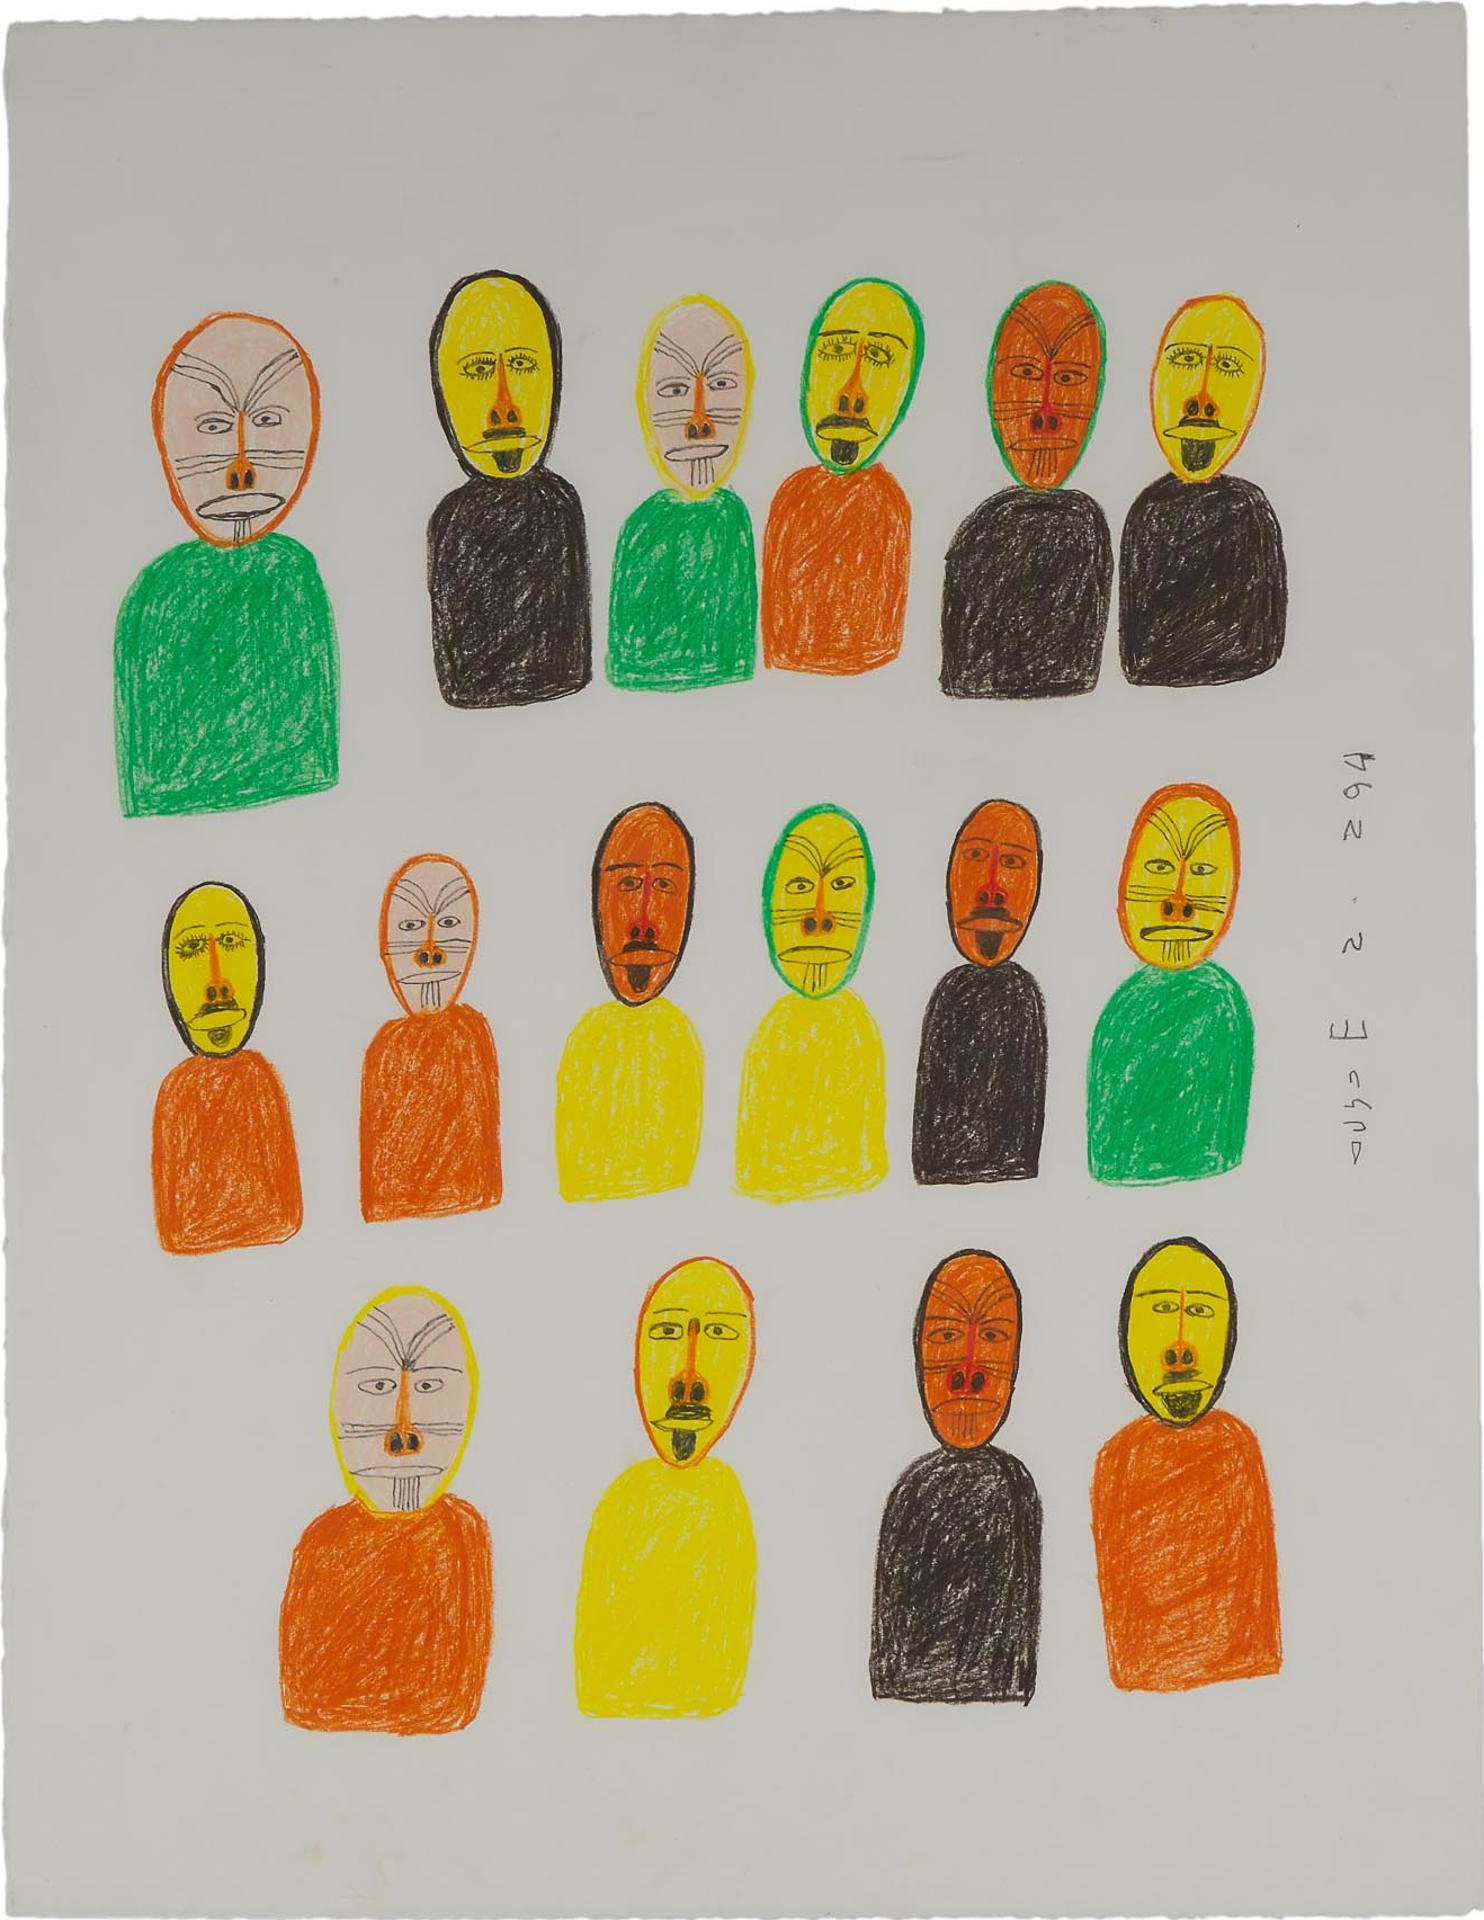 Luke H.Amitnaaq Anguhadluq (1895-1982) - Many Faces, 1972